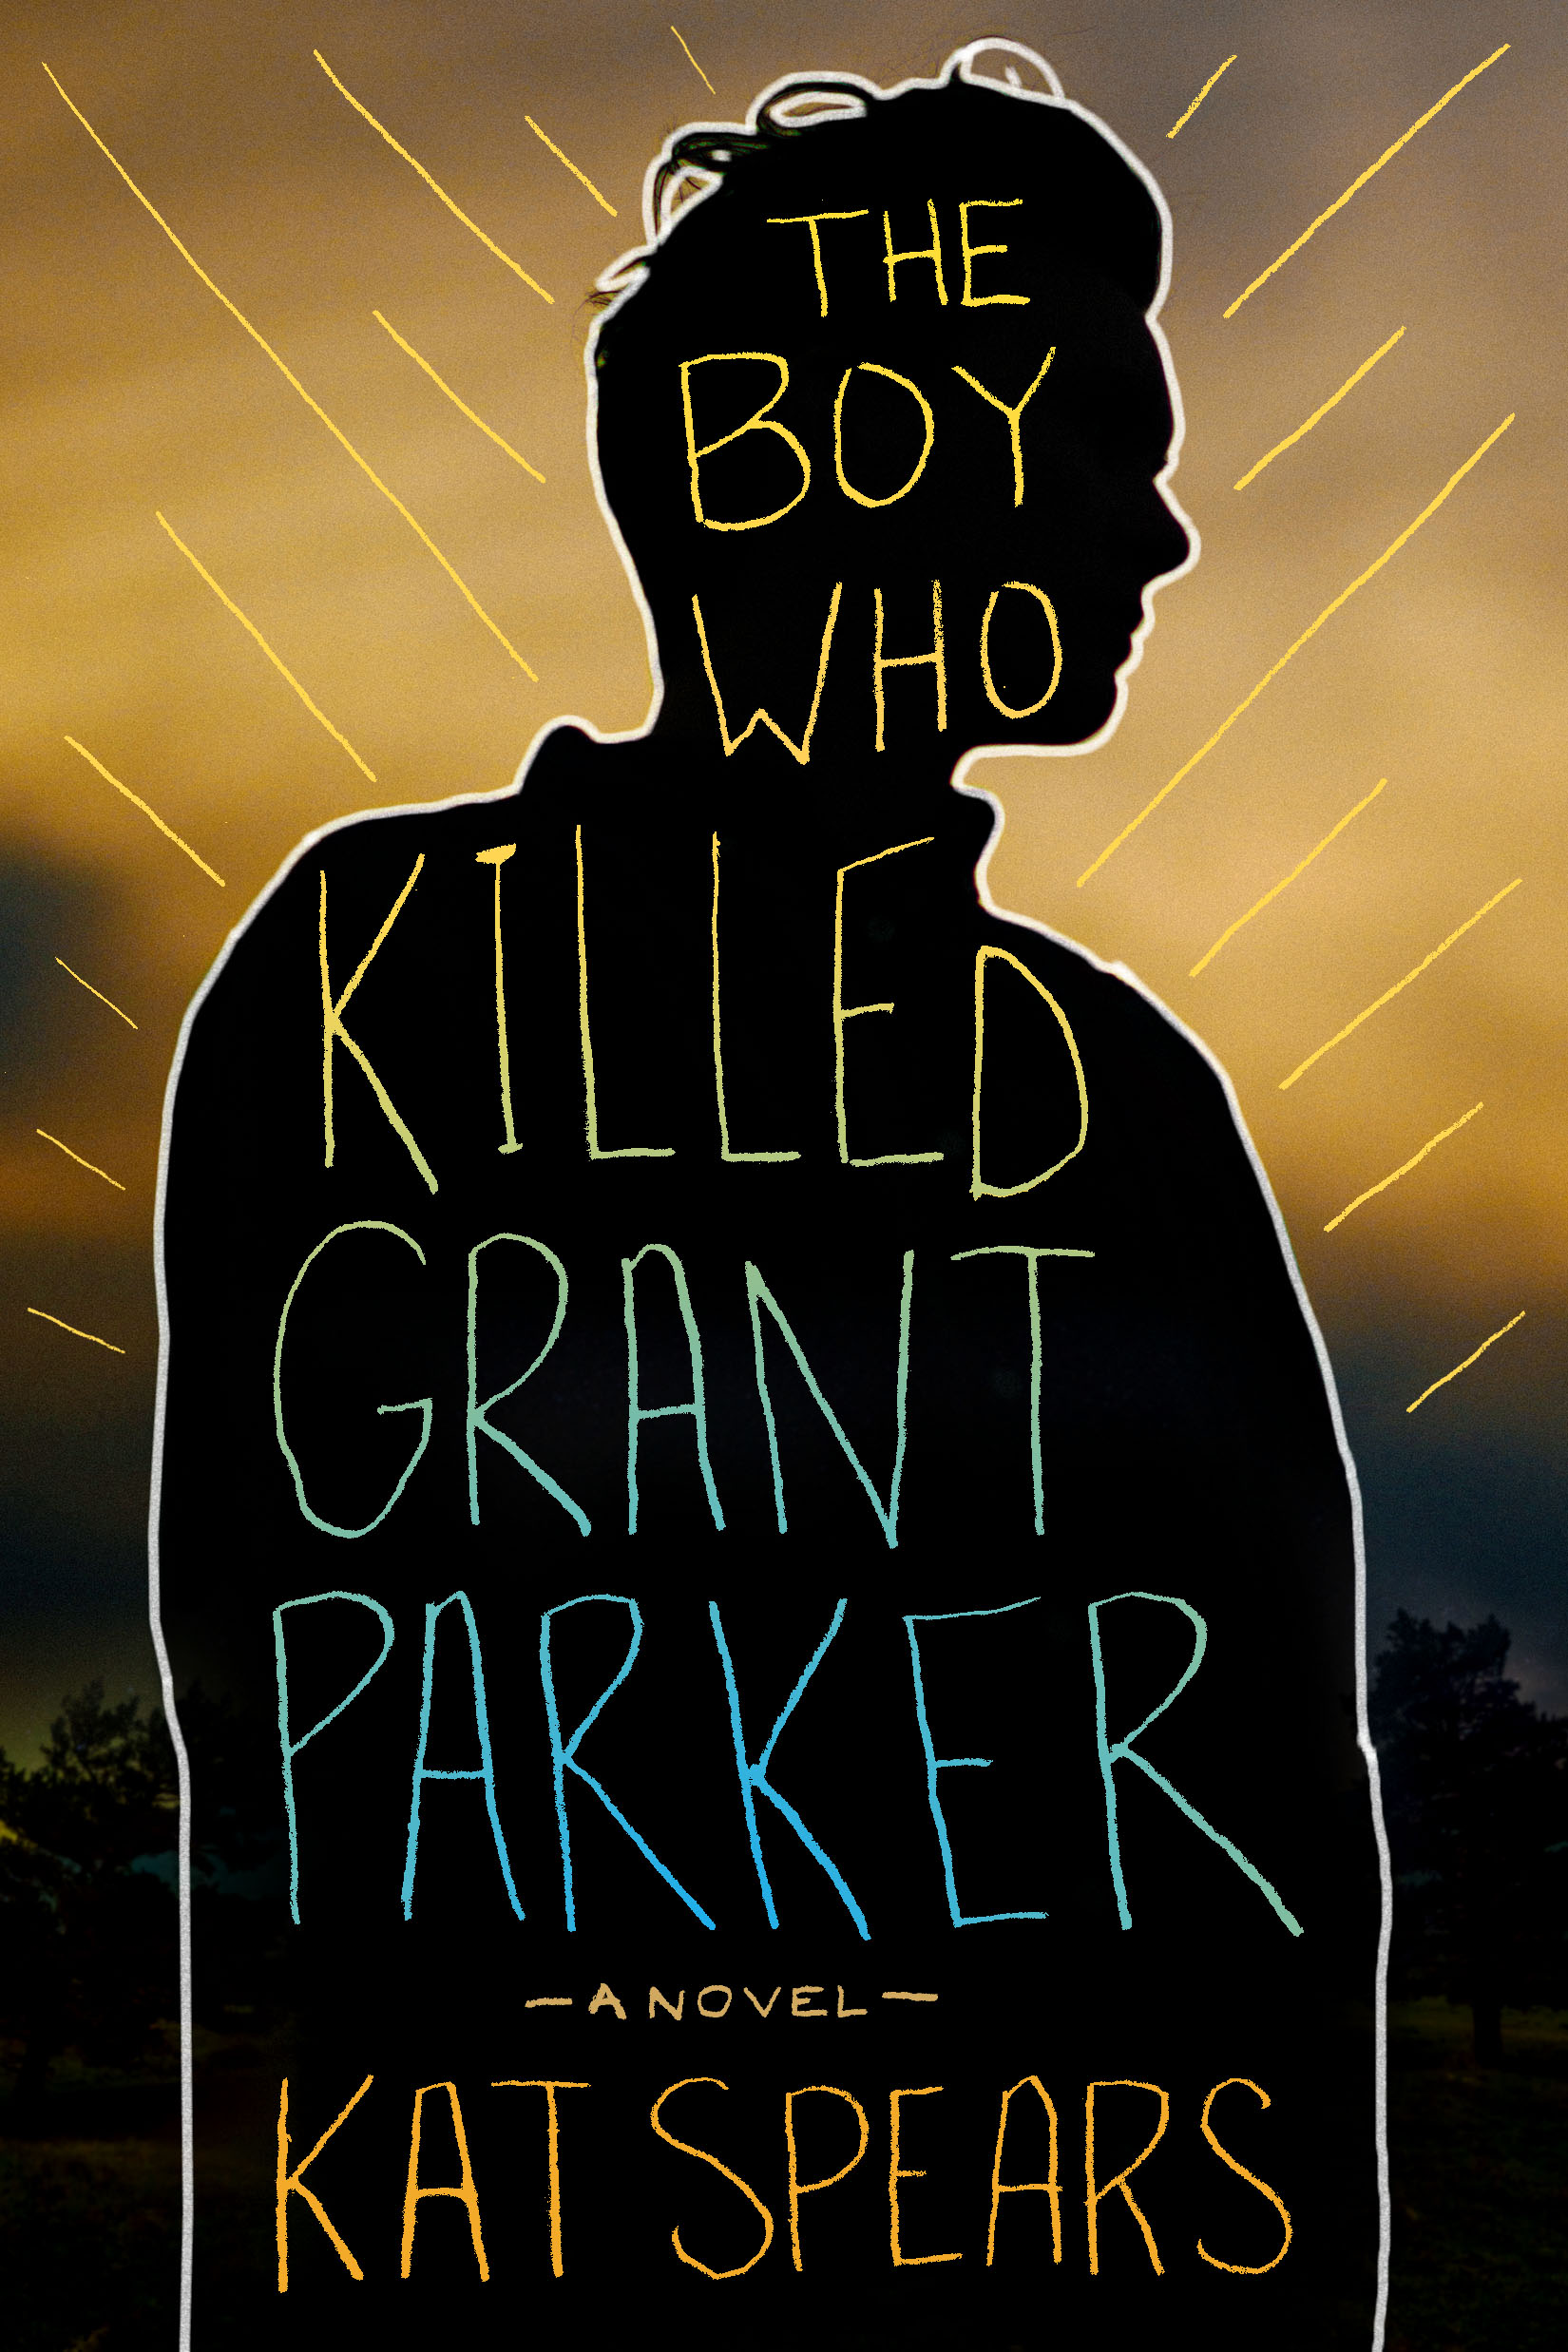 The Boy Who Killed Grant Parker: A Novel